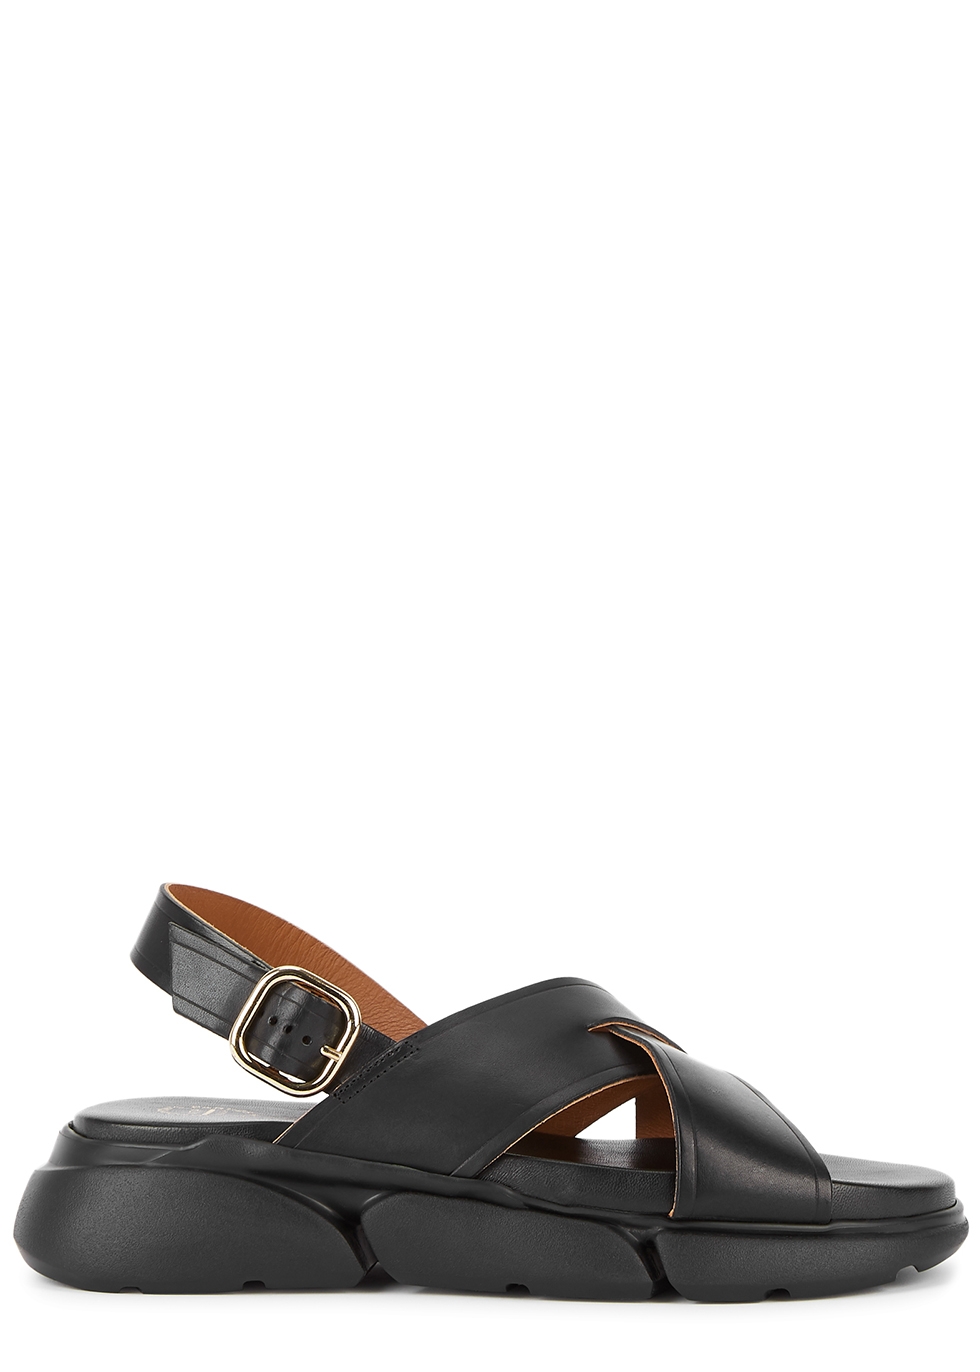 ATP Atelier Barisci black leather sandals - Harvey Nichols